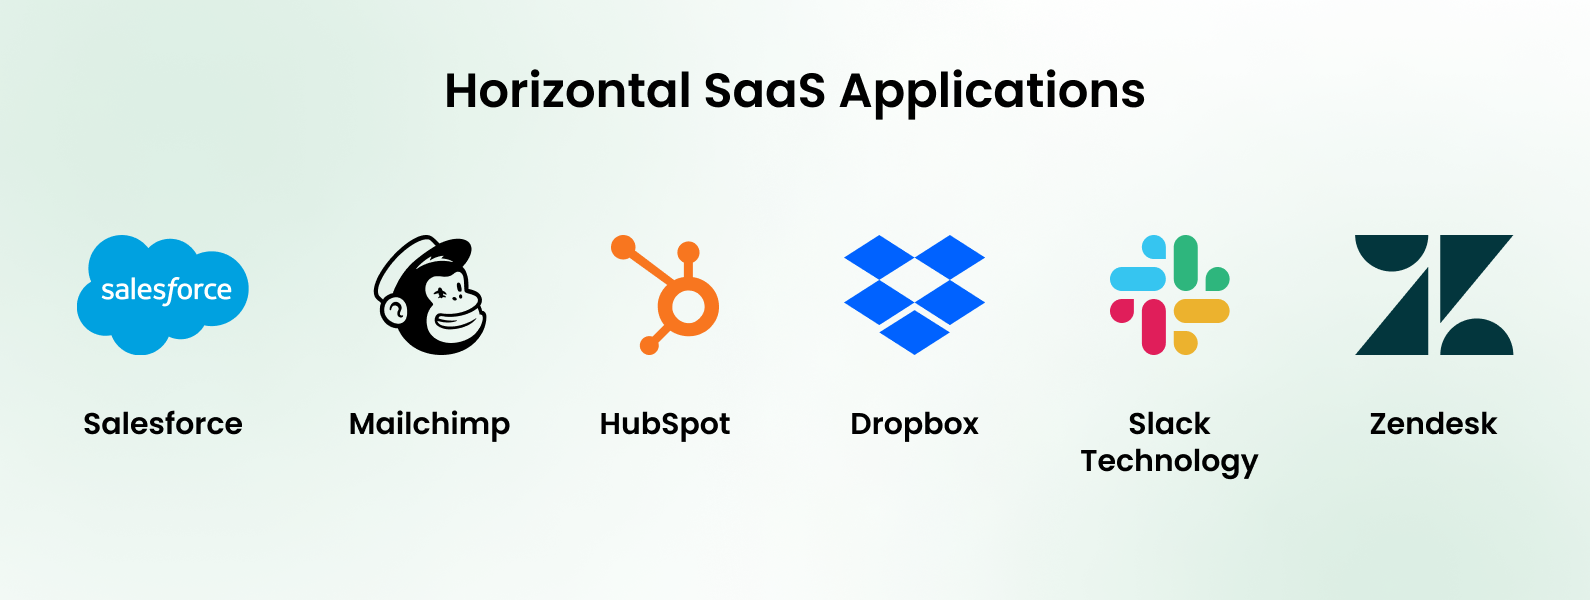 Horizontal SaaS Applications